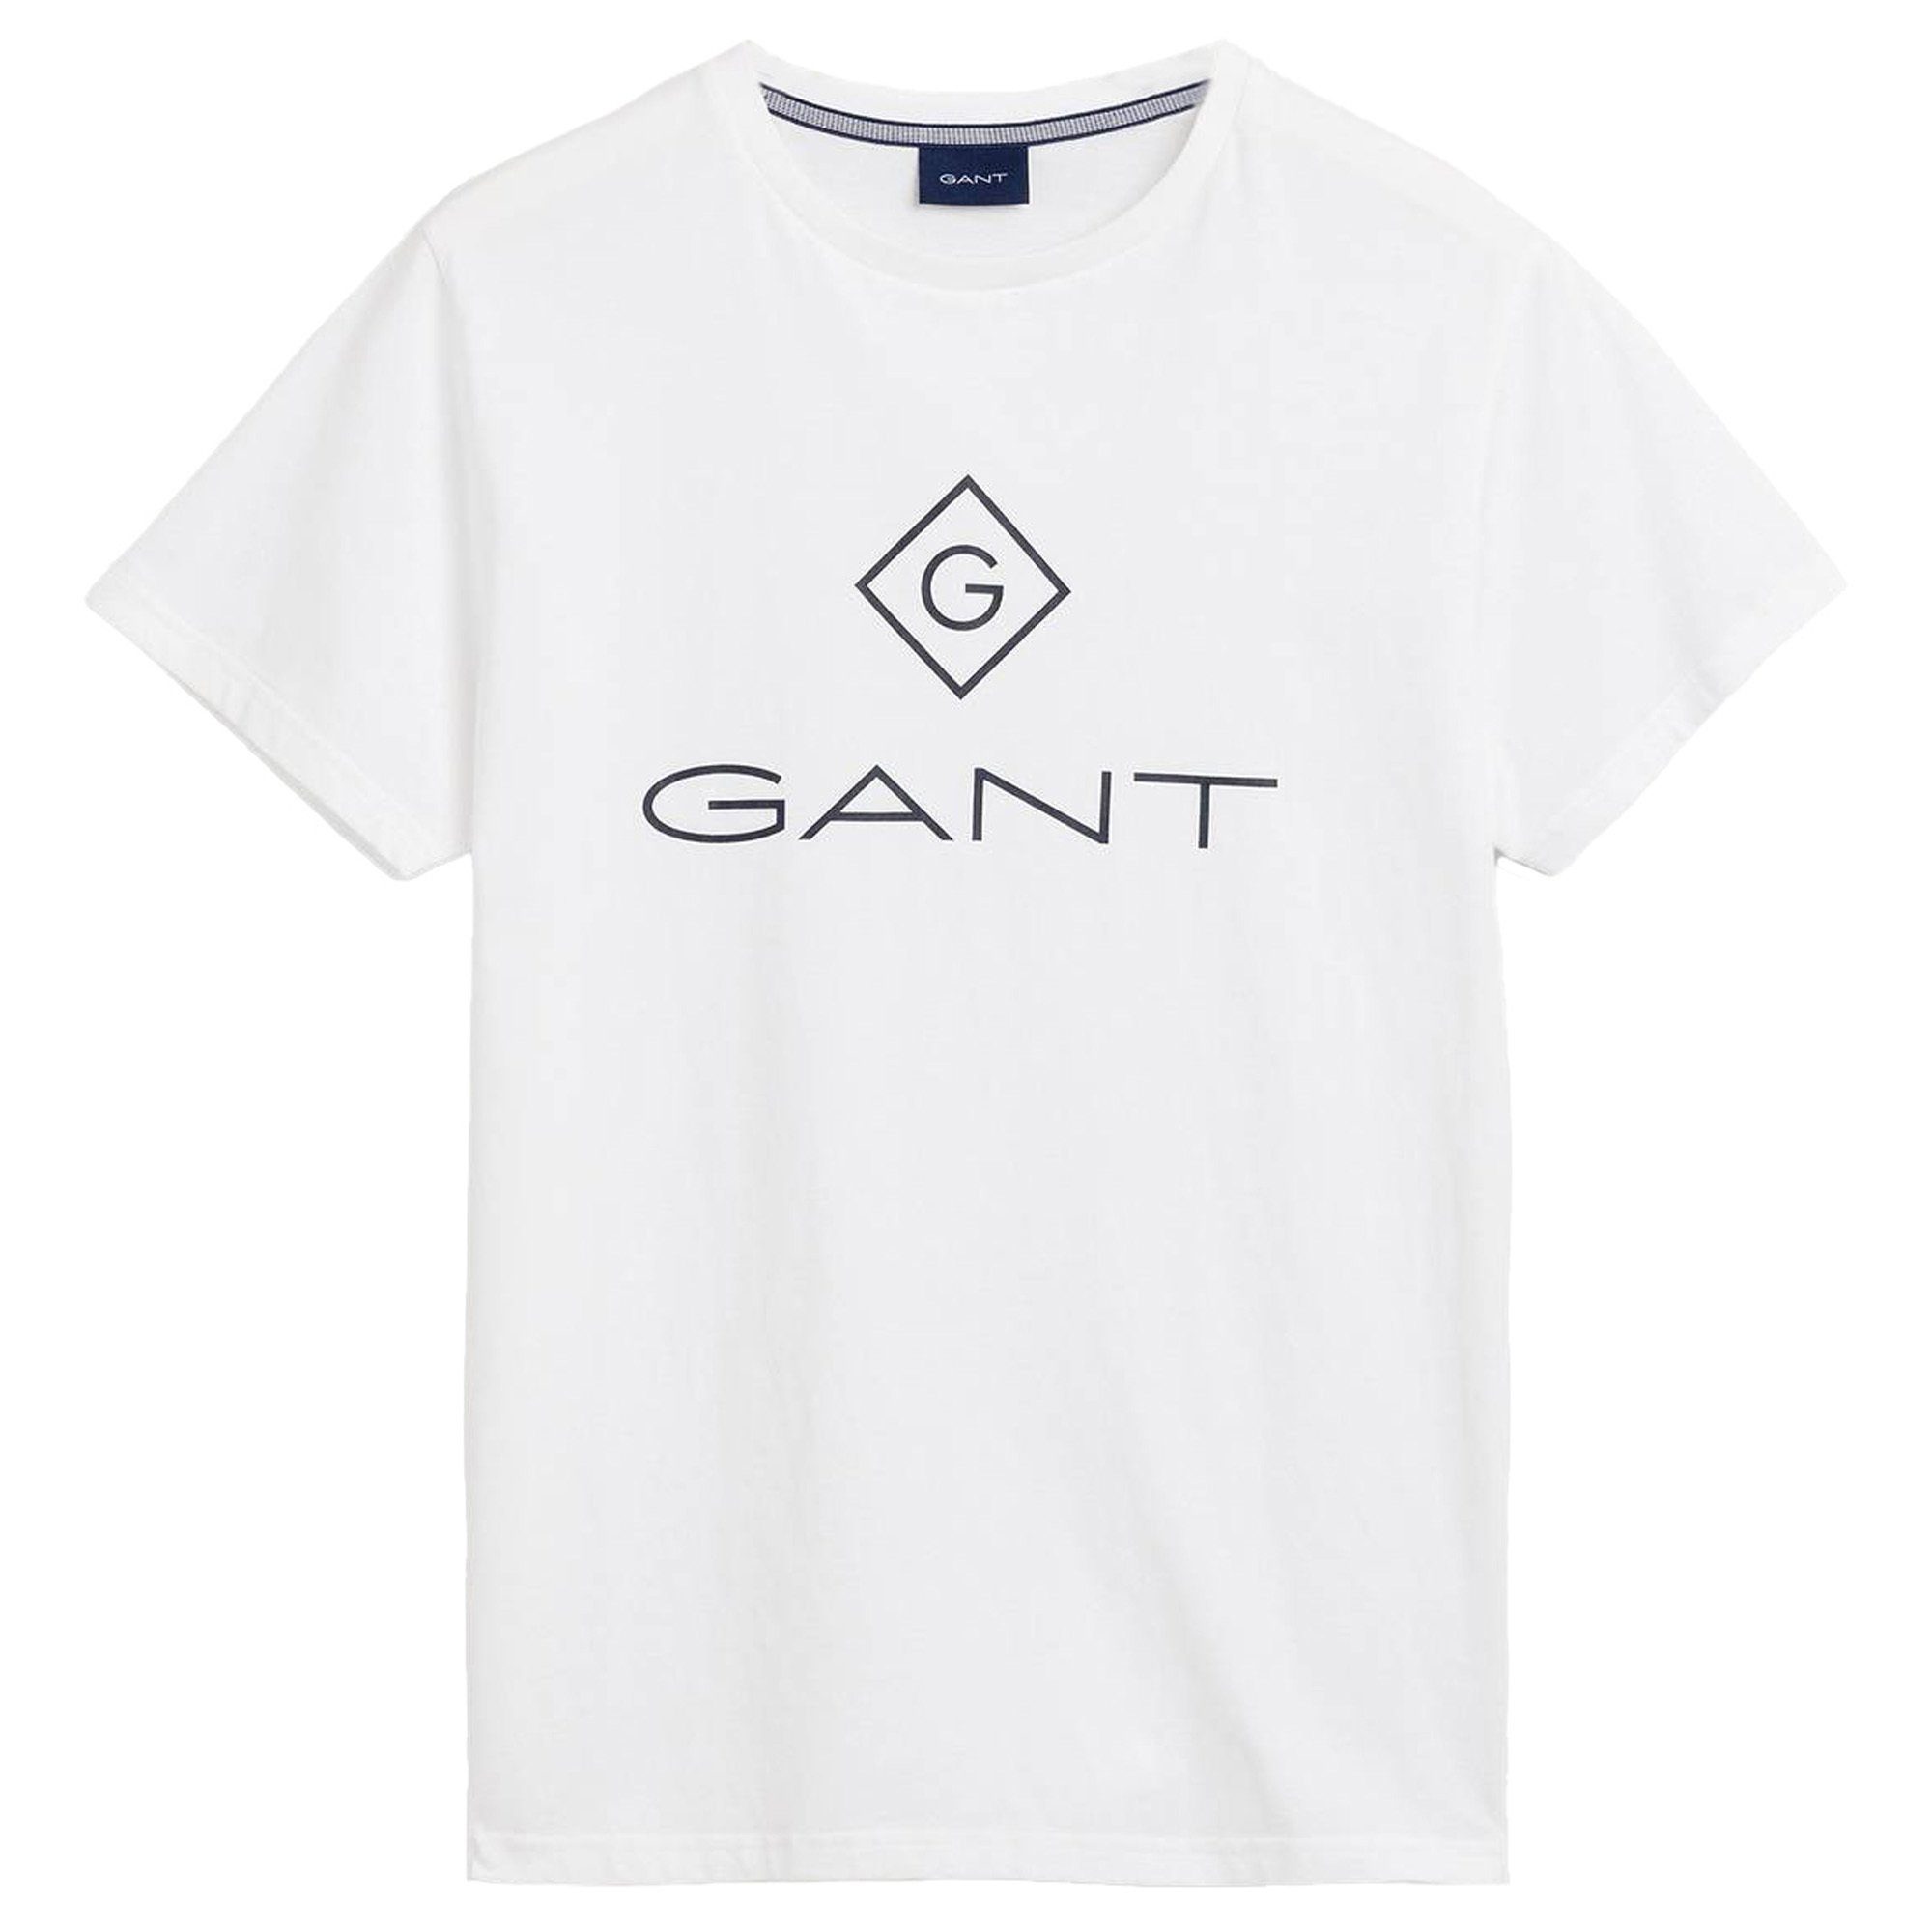 Gant T-Shirt Herren T-Shirt - Weiß Logo, T-Shirt, einfarbig Up Lock